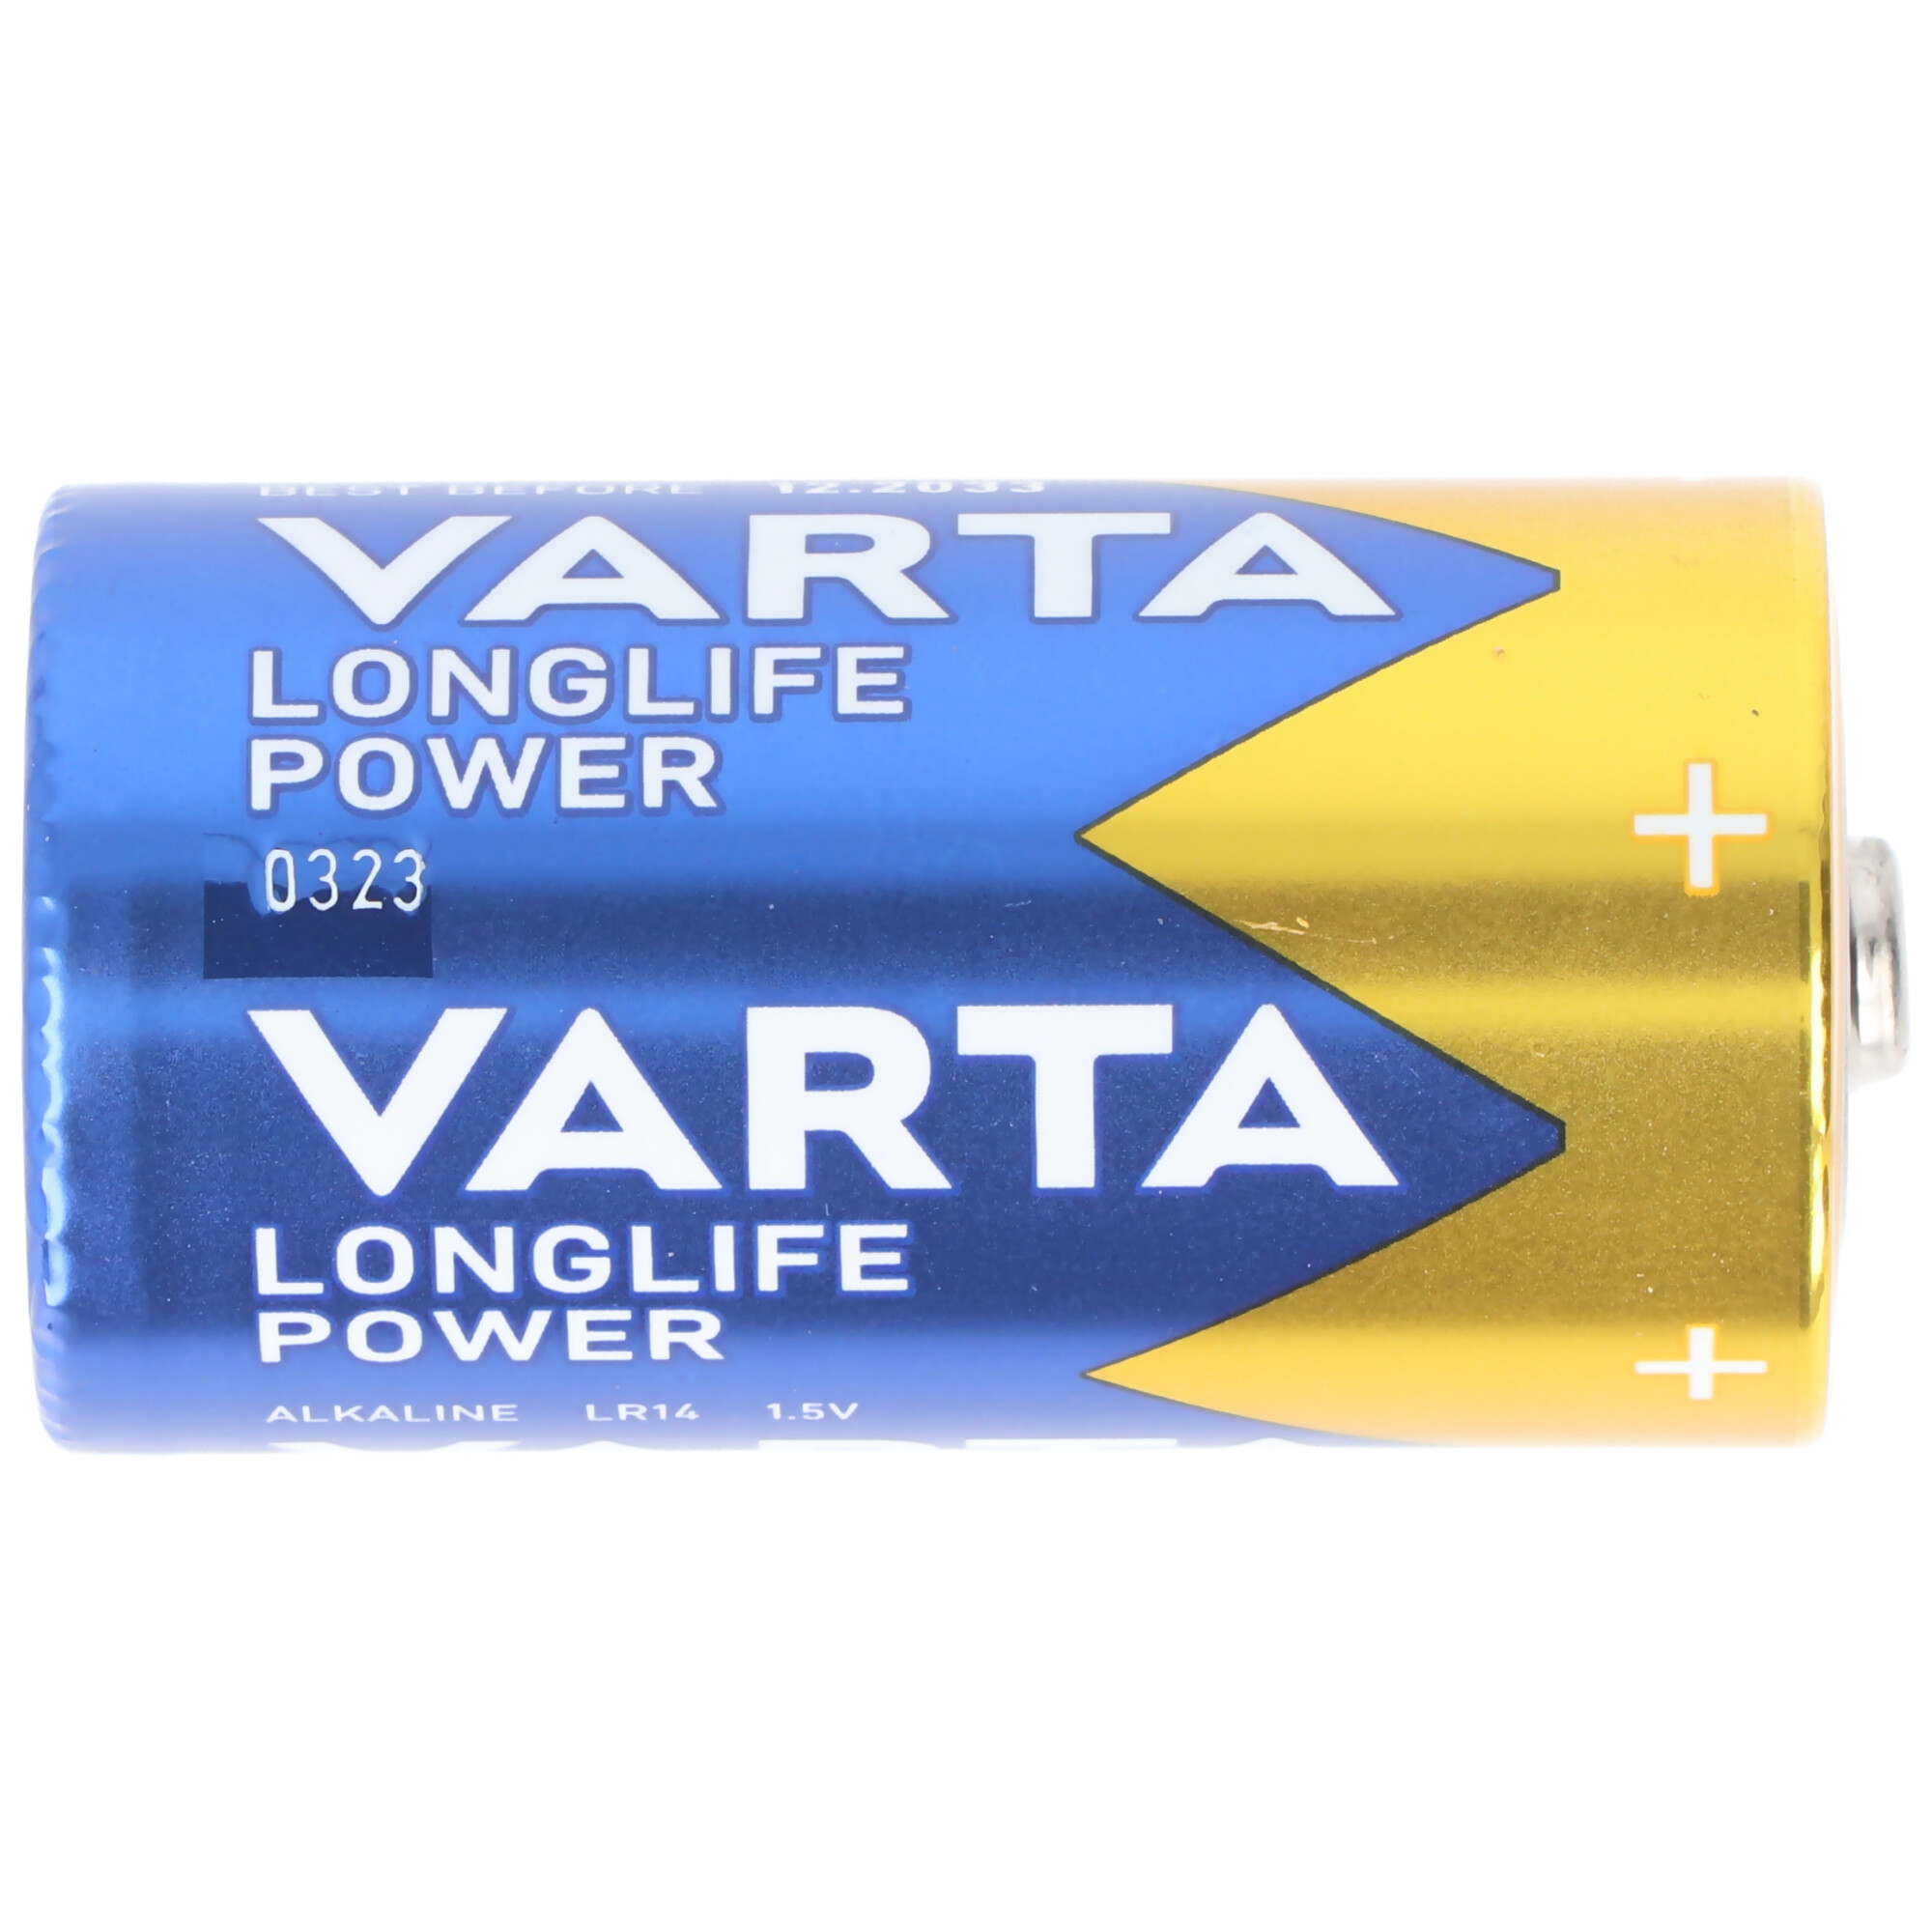 Varta Longlife Power (ehem. High Energy) Alkaline Batterie Baby, LR14, Size C lose Ware 1 Stück